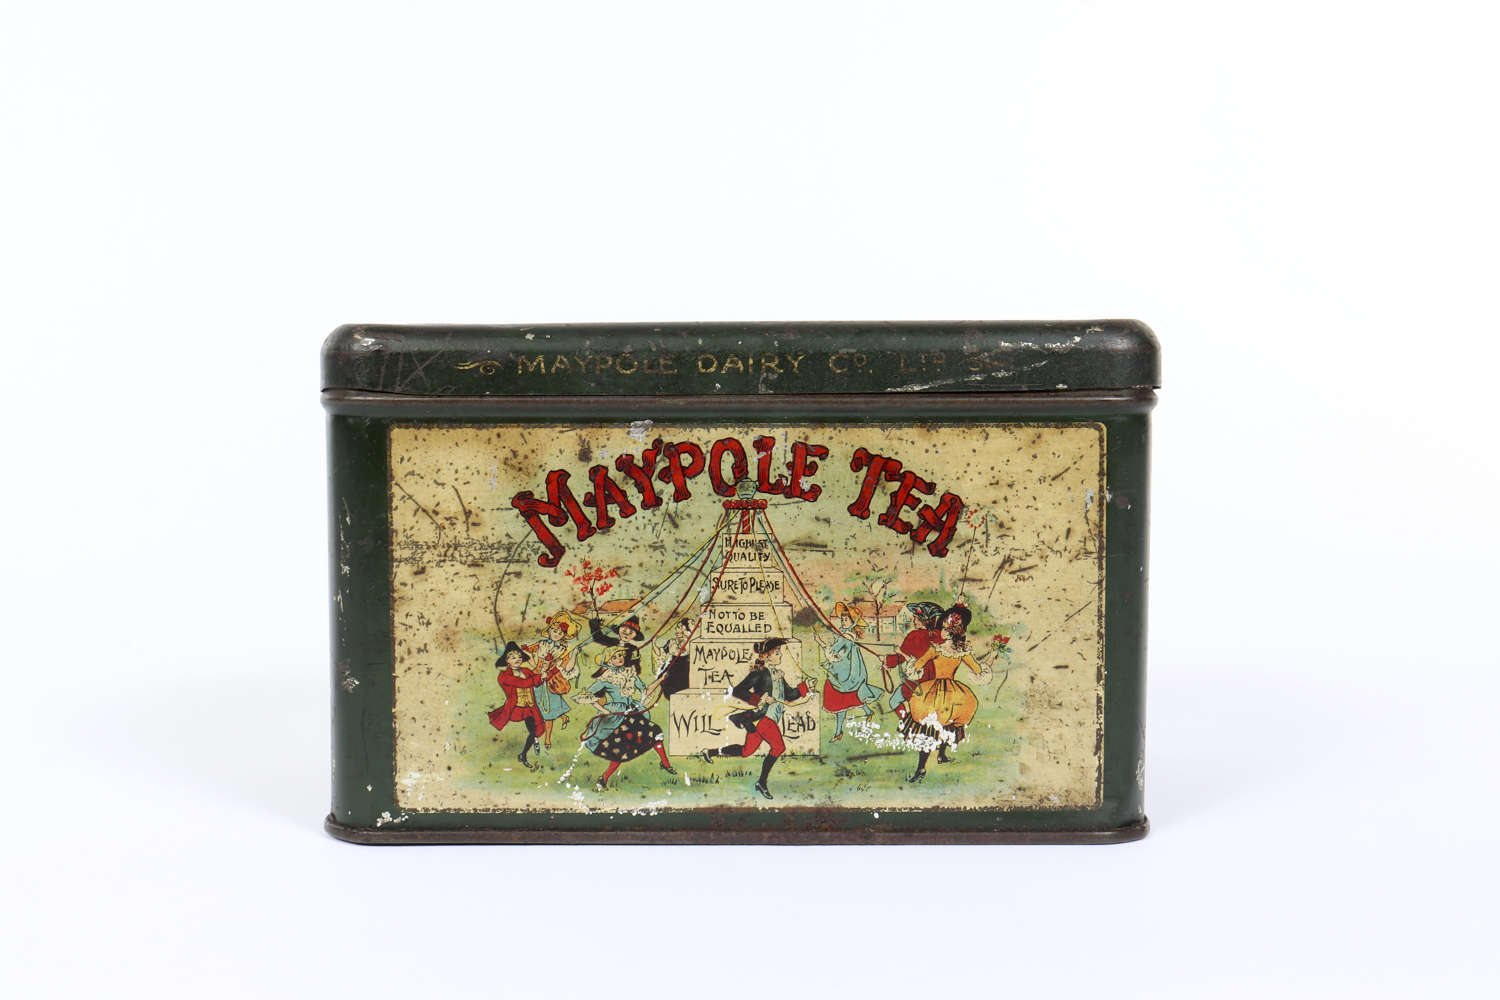 Maypole Tea tin by The Maypole Dairy Co. Ltd